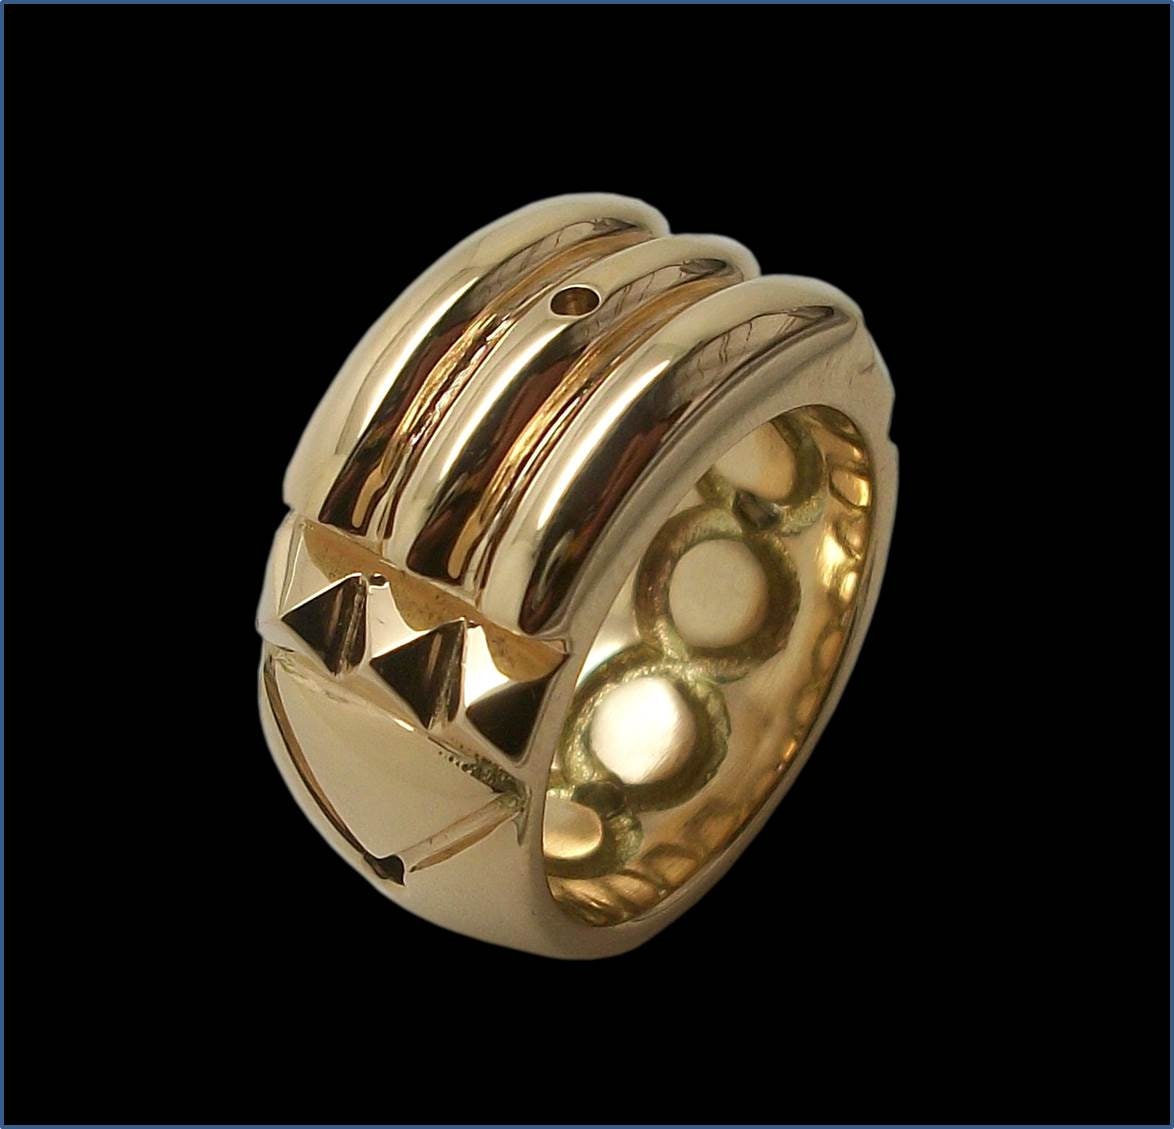 Atlantis ring - 18K Solid Gold Atlantis Ring -ALL SIZES